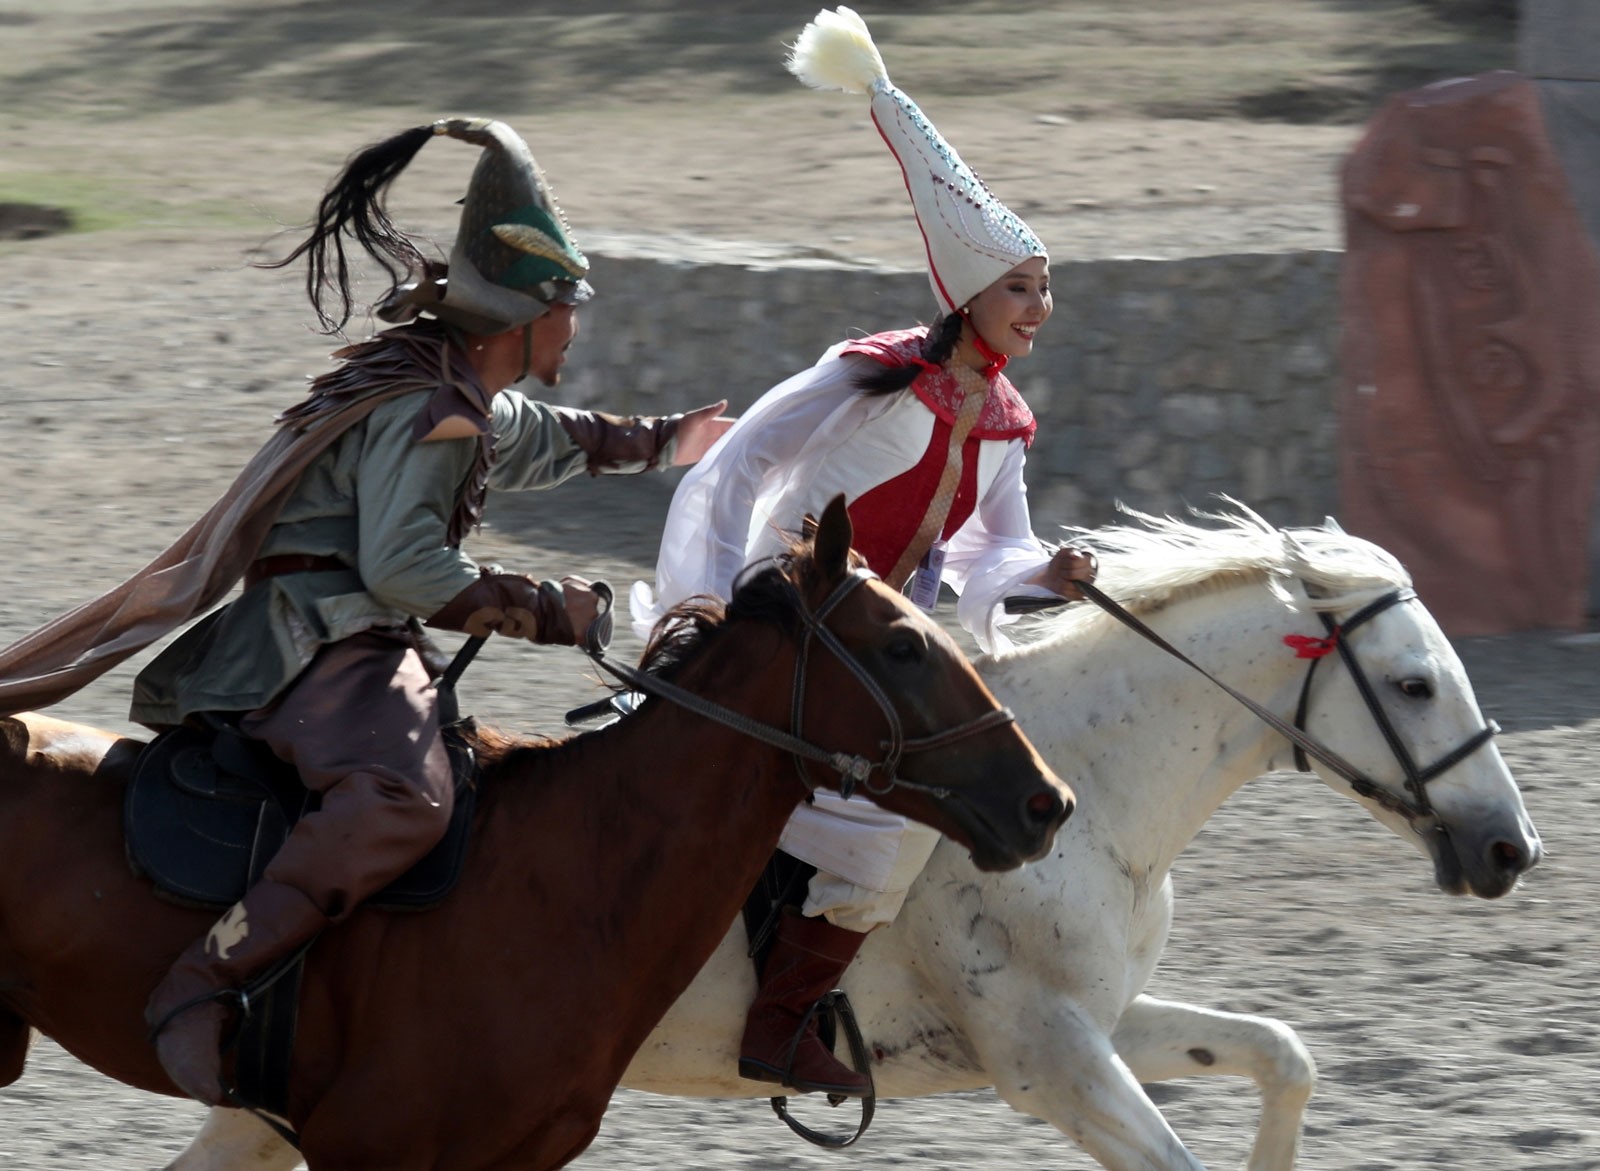 Kyrgyzstan kicks off third World Nomad Games